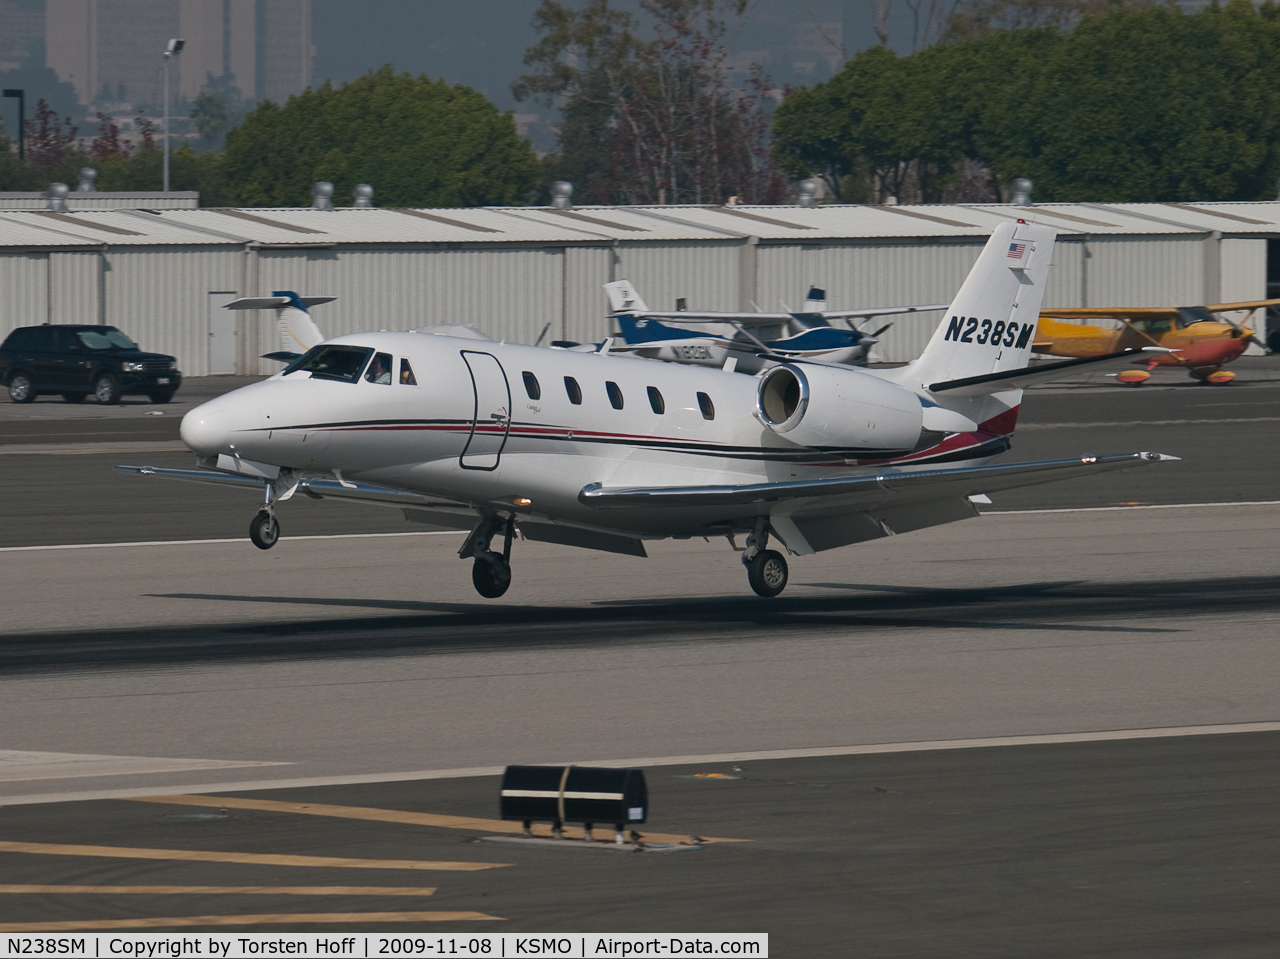 N238SM, 2002 Cessna 560XL C/N 560-5238, N238SM arriving on RWY 21